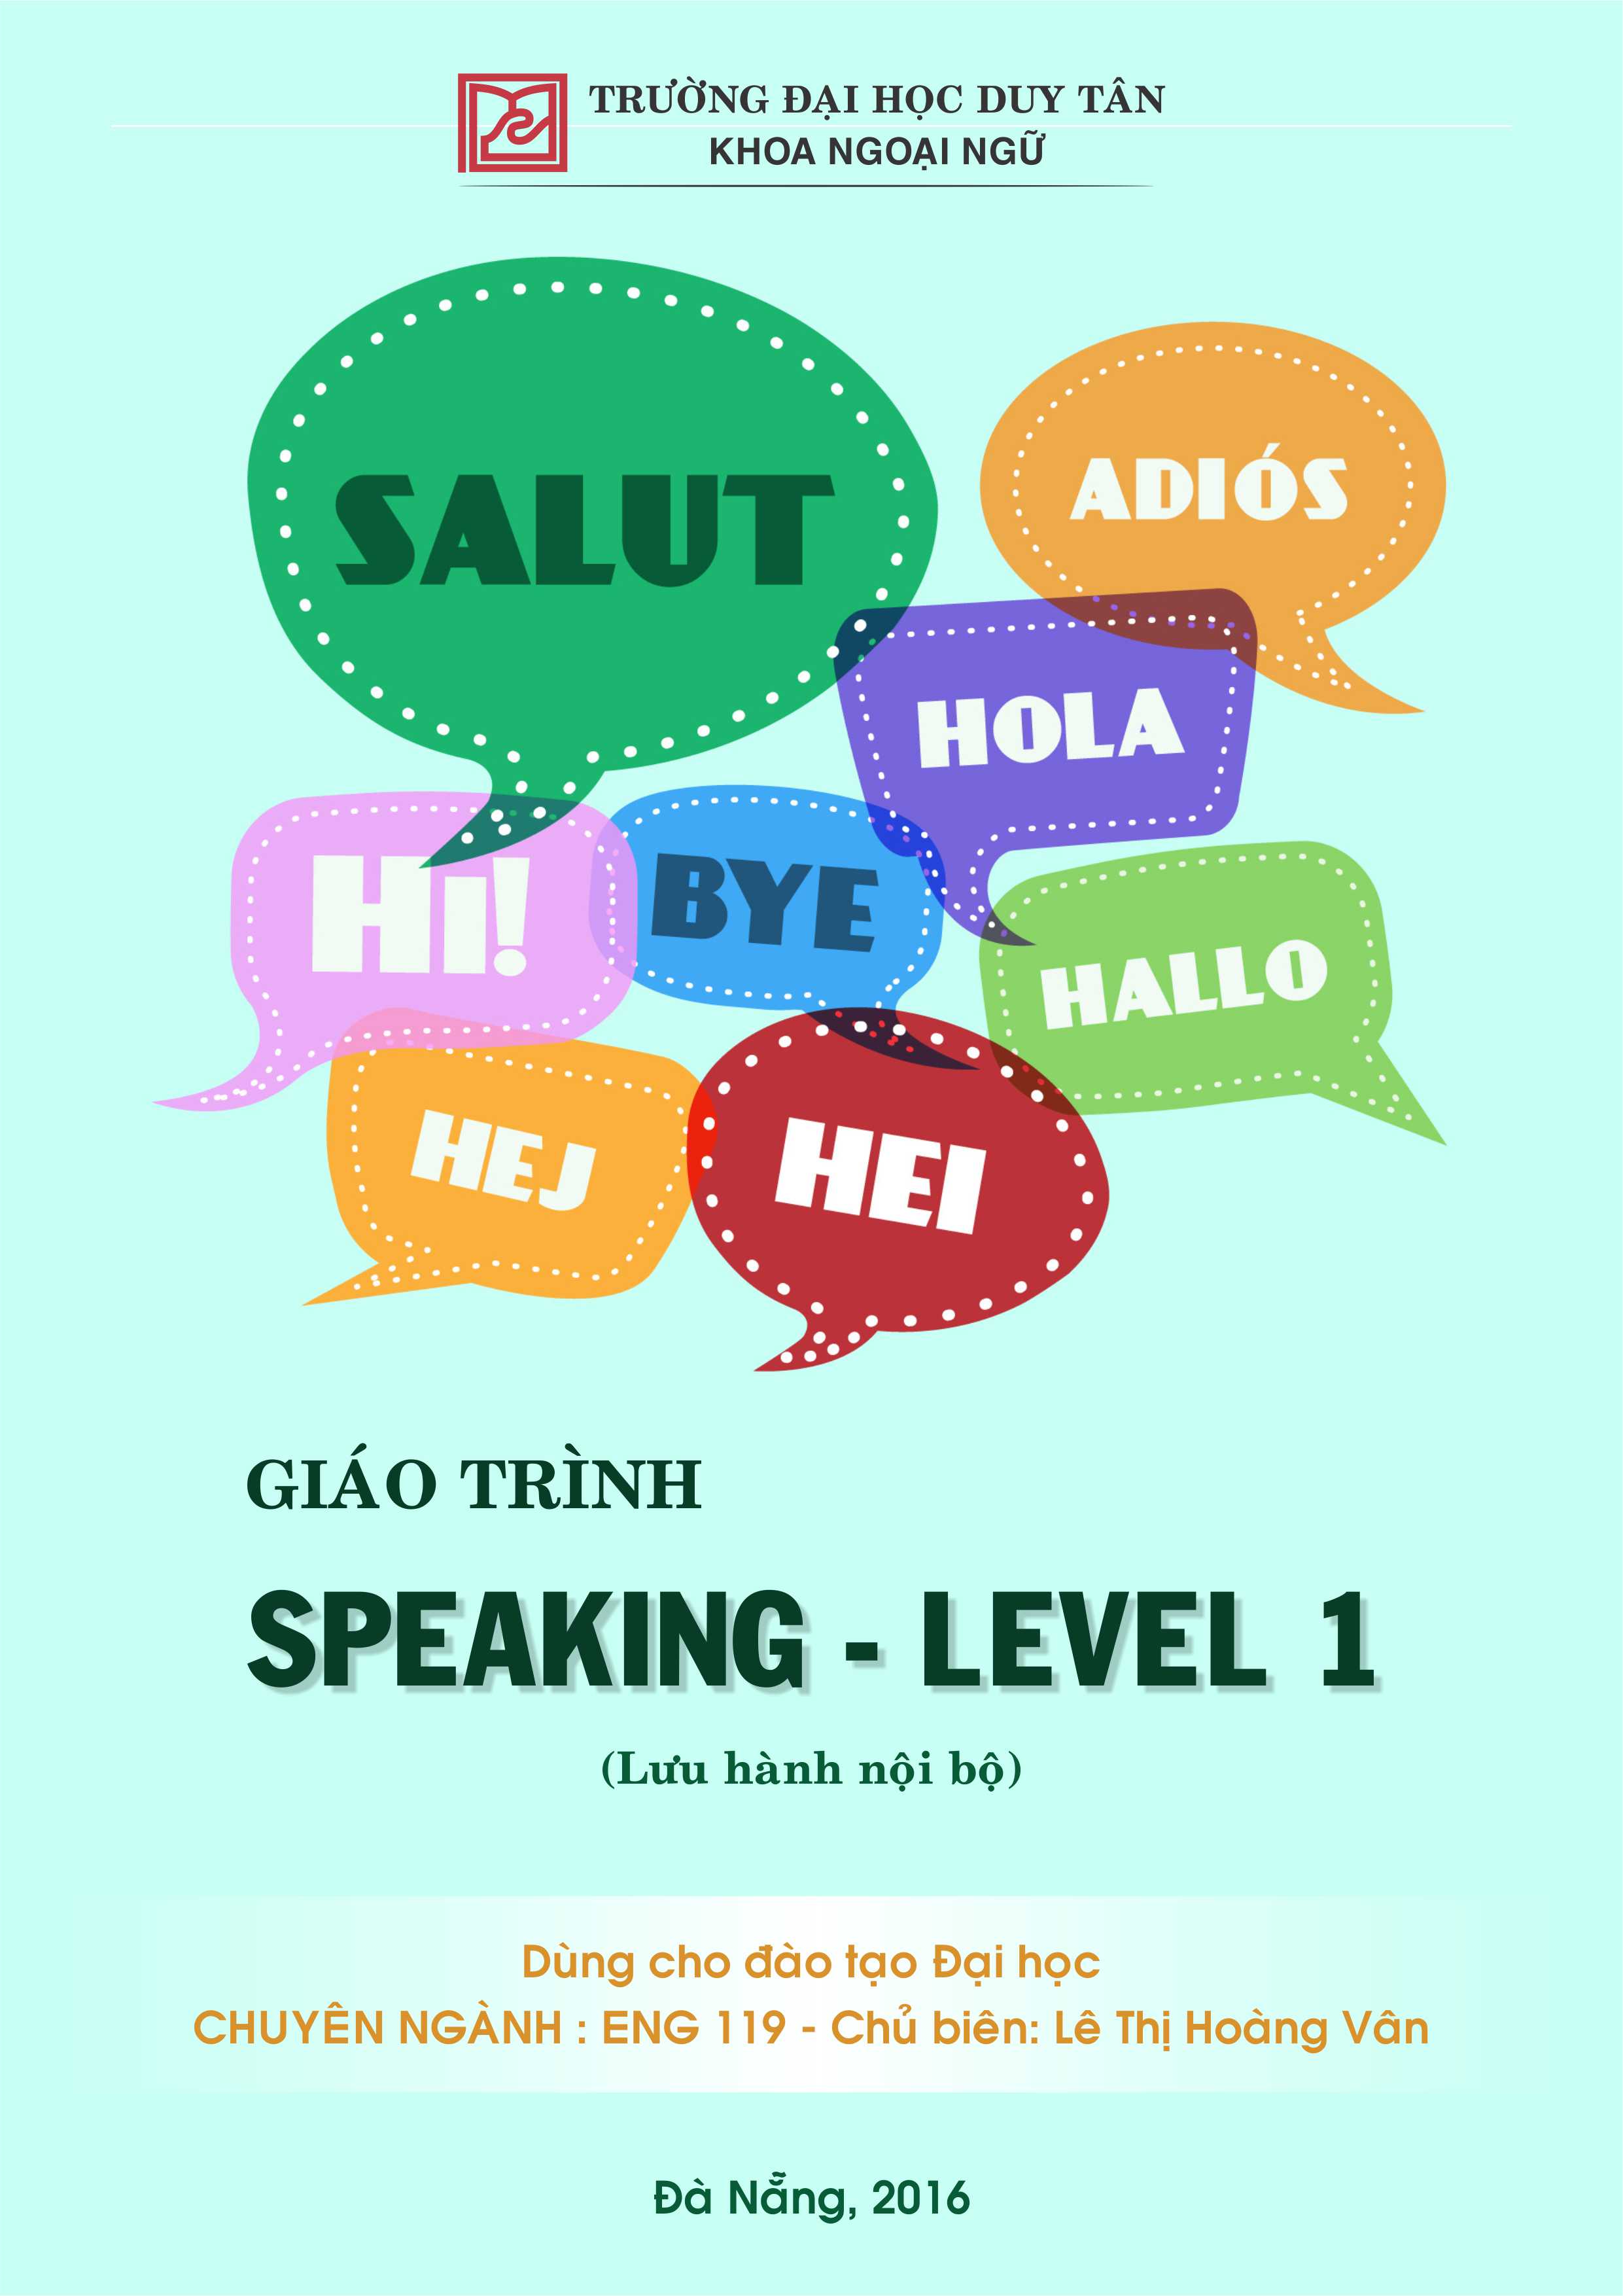 Speaking - Level 1